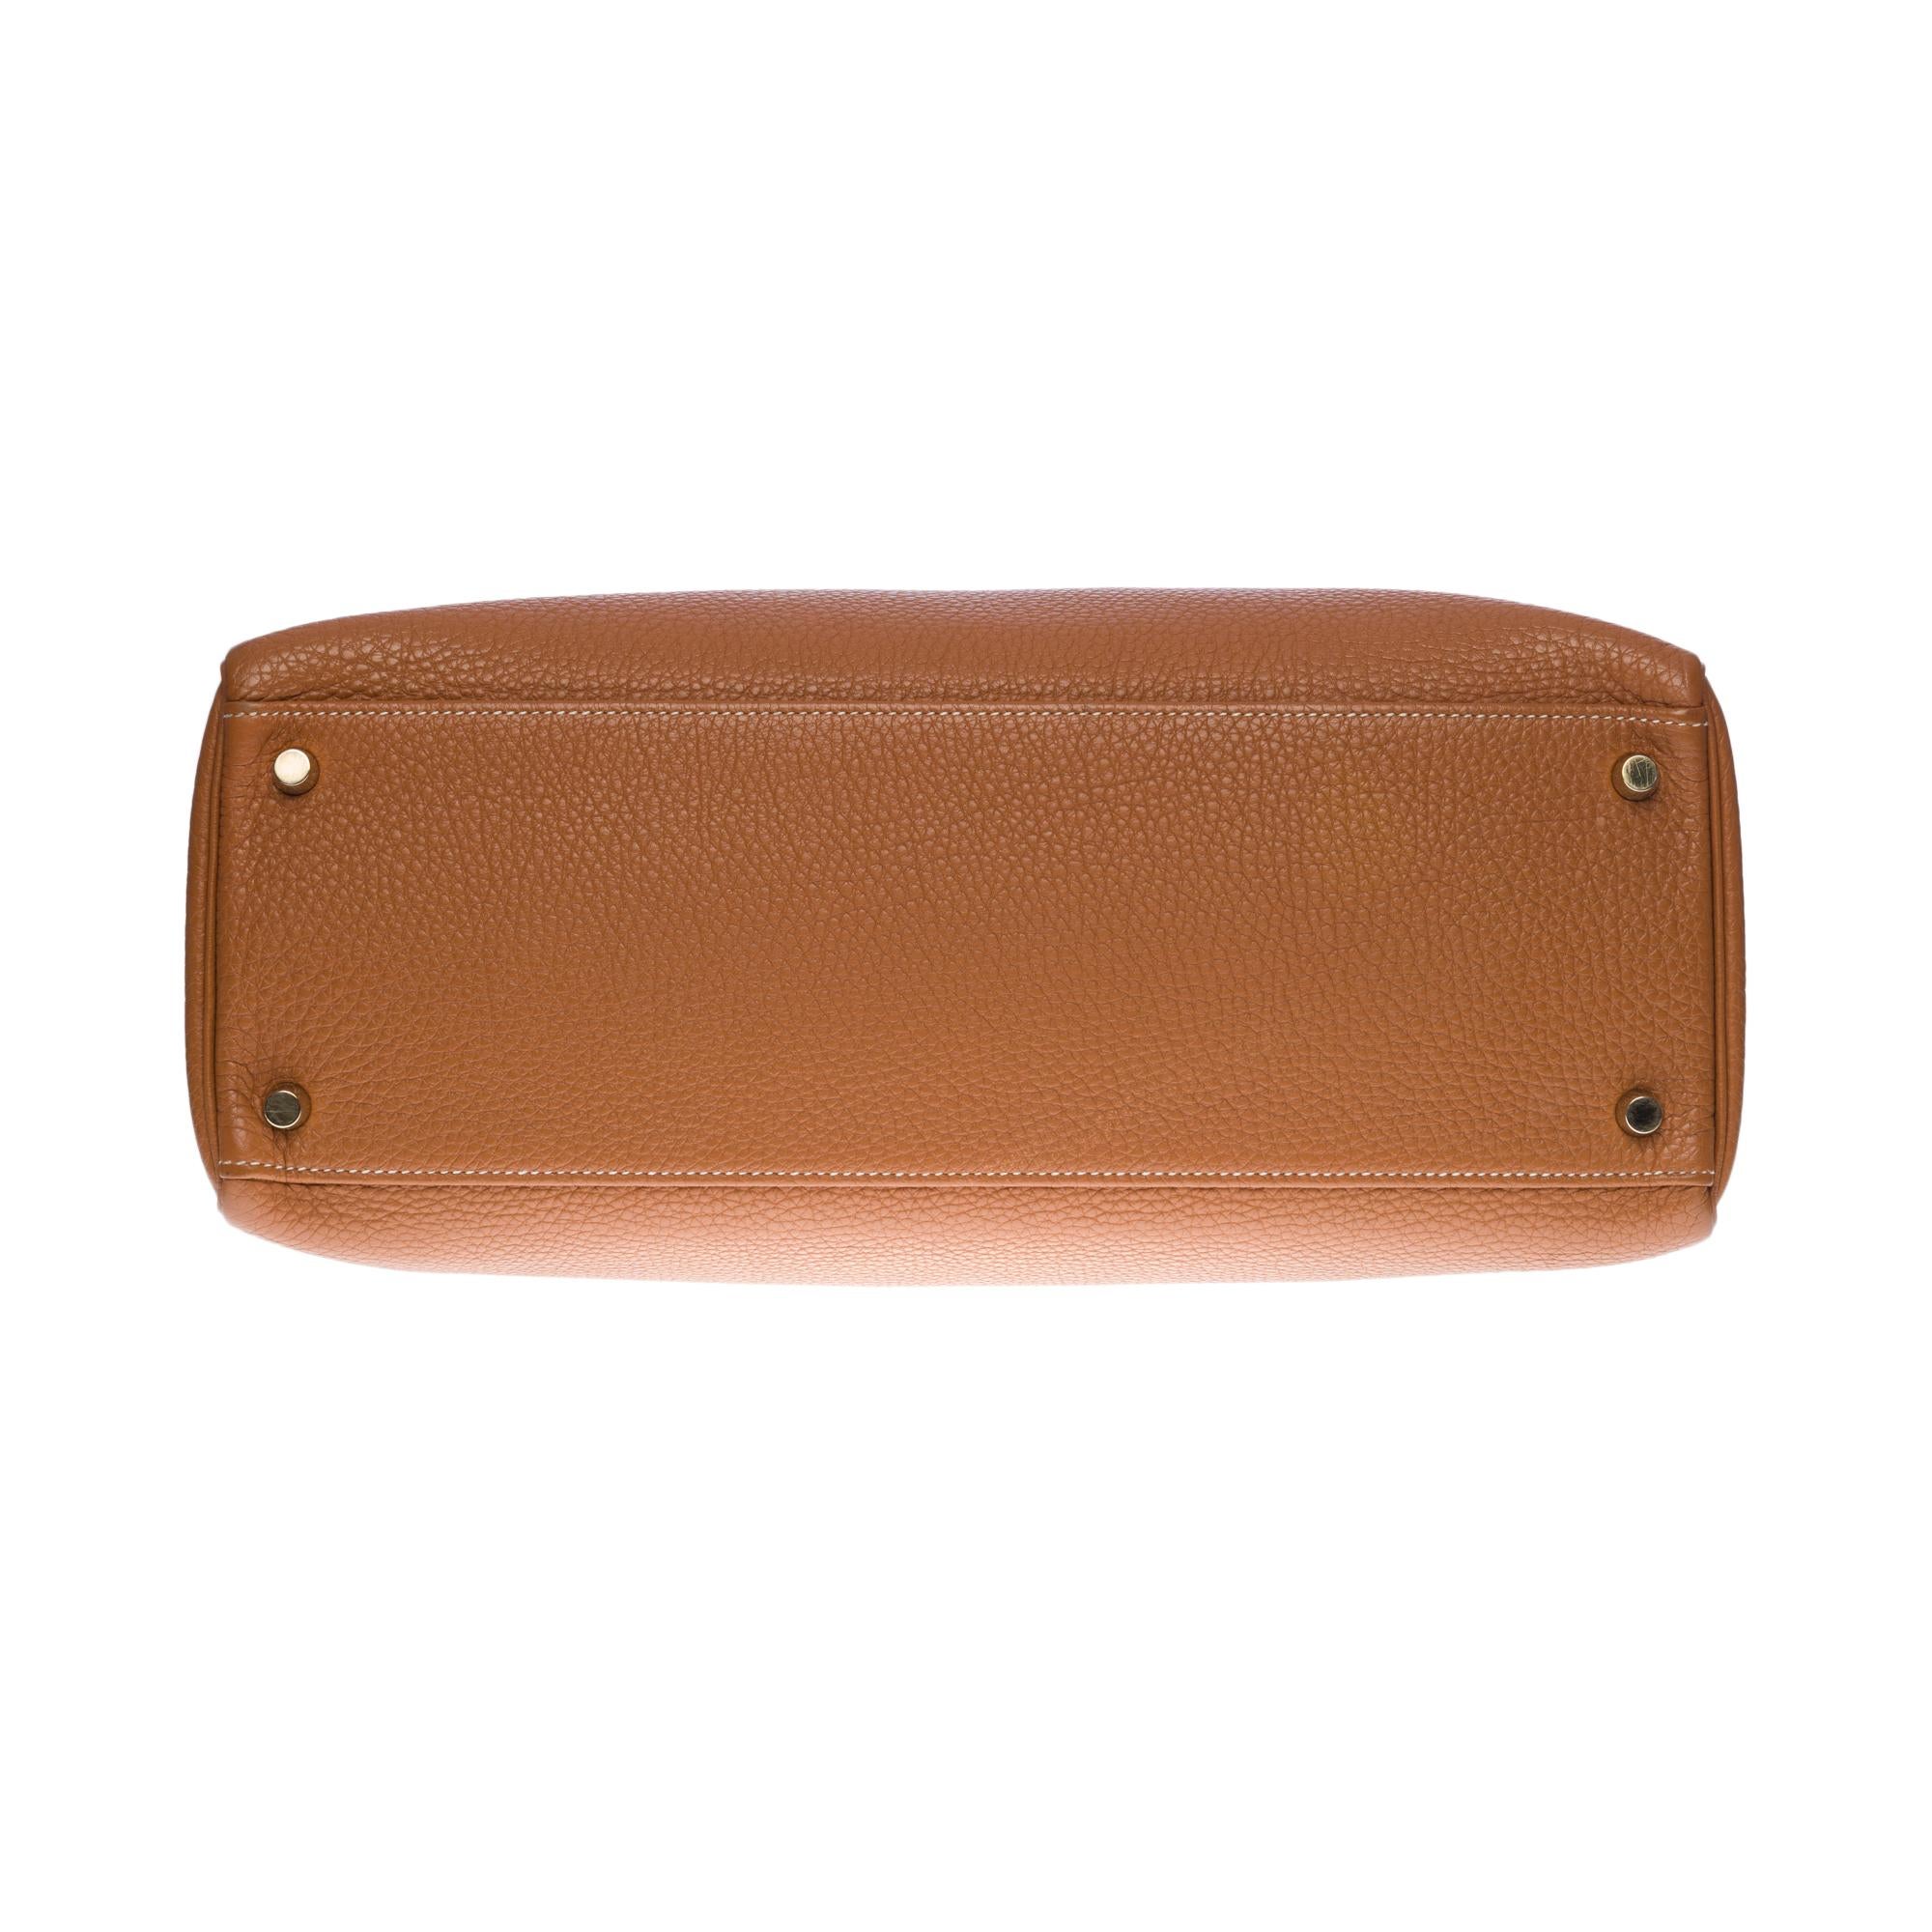 Gorgeous Hermès Kelly 35 retourné handbag strap in Gold Togo leather, GHW 3